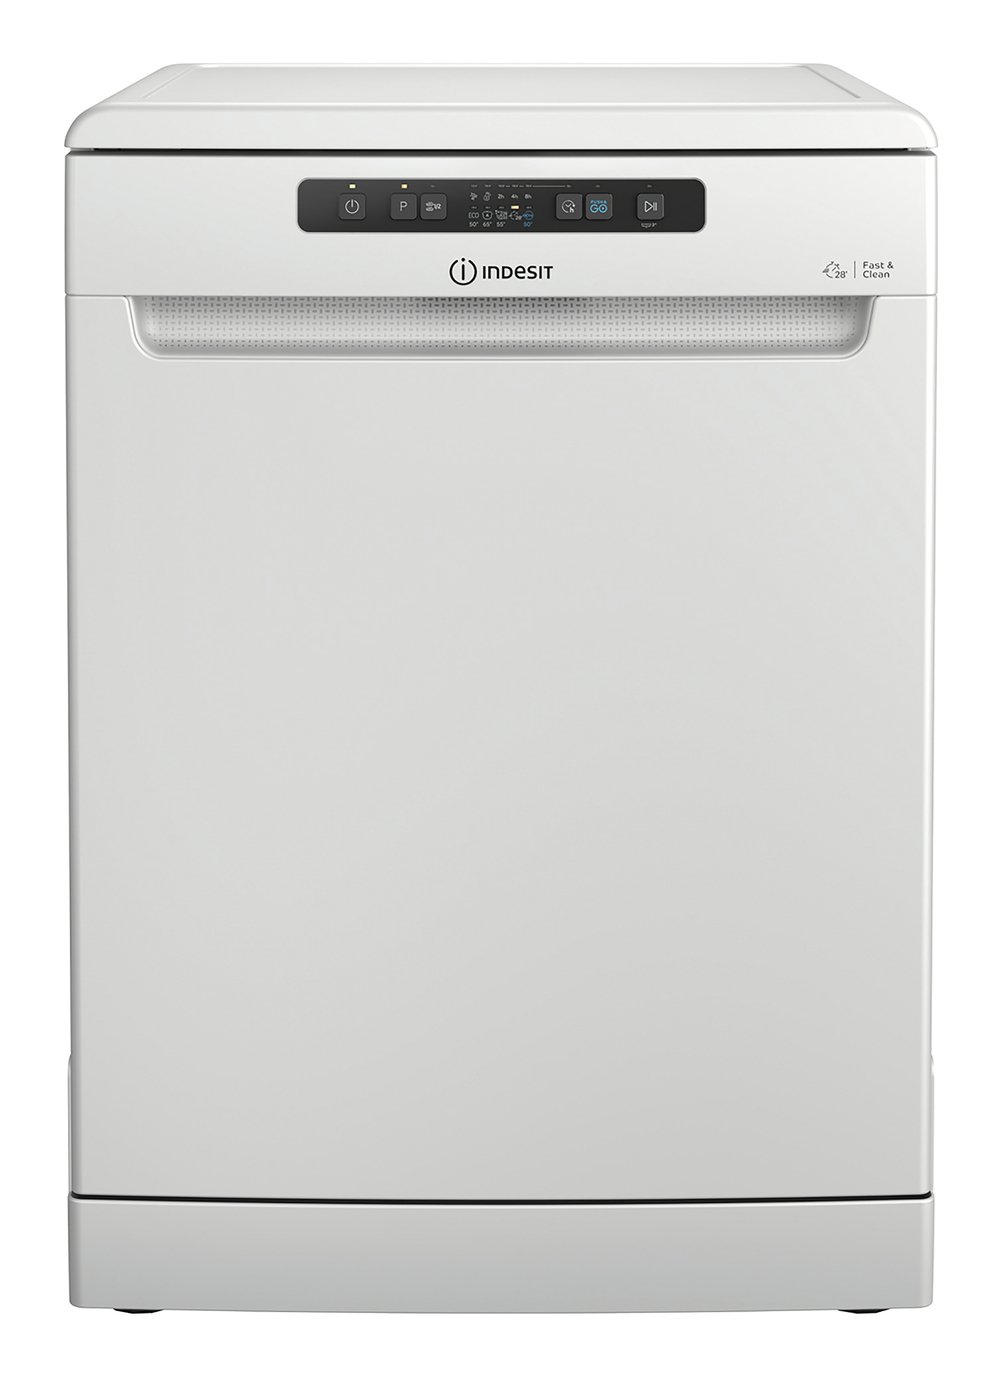 Indesit DFC2C24UK Full Size Dishwasher Review